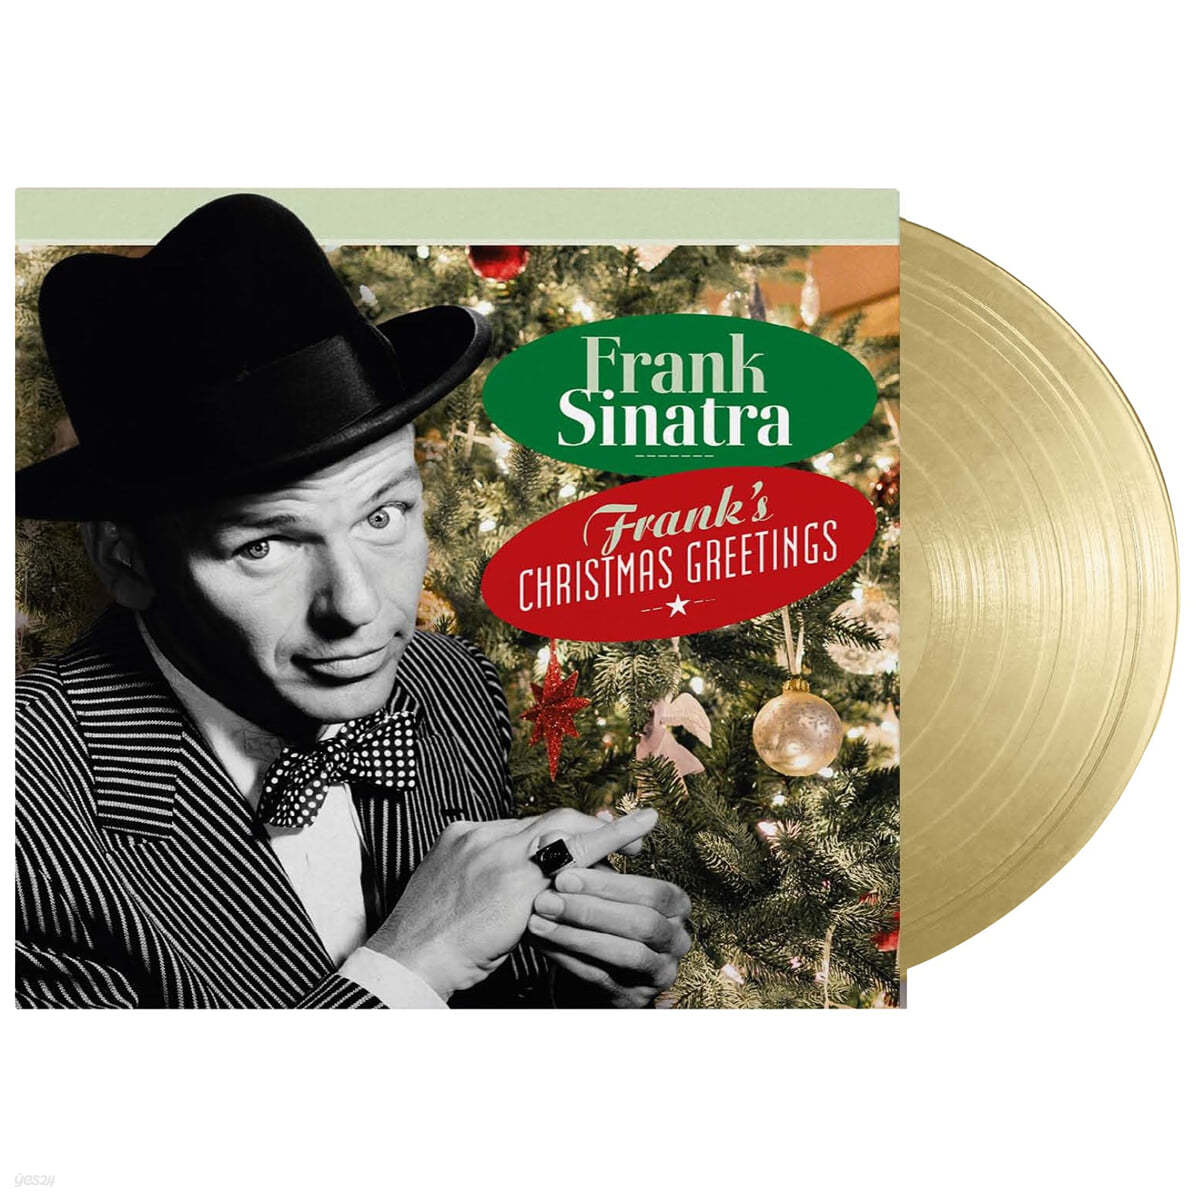 Frank Sinatra - Frank's Christmas Greetings 프랭크 시나트라 크리스마스 앨범 [골드 컬러 LP]